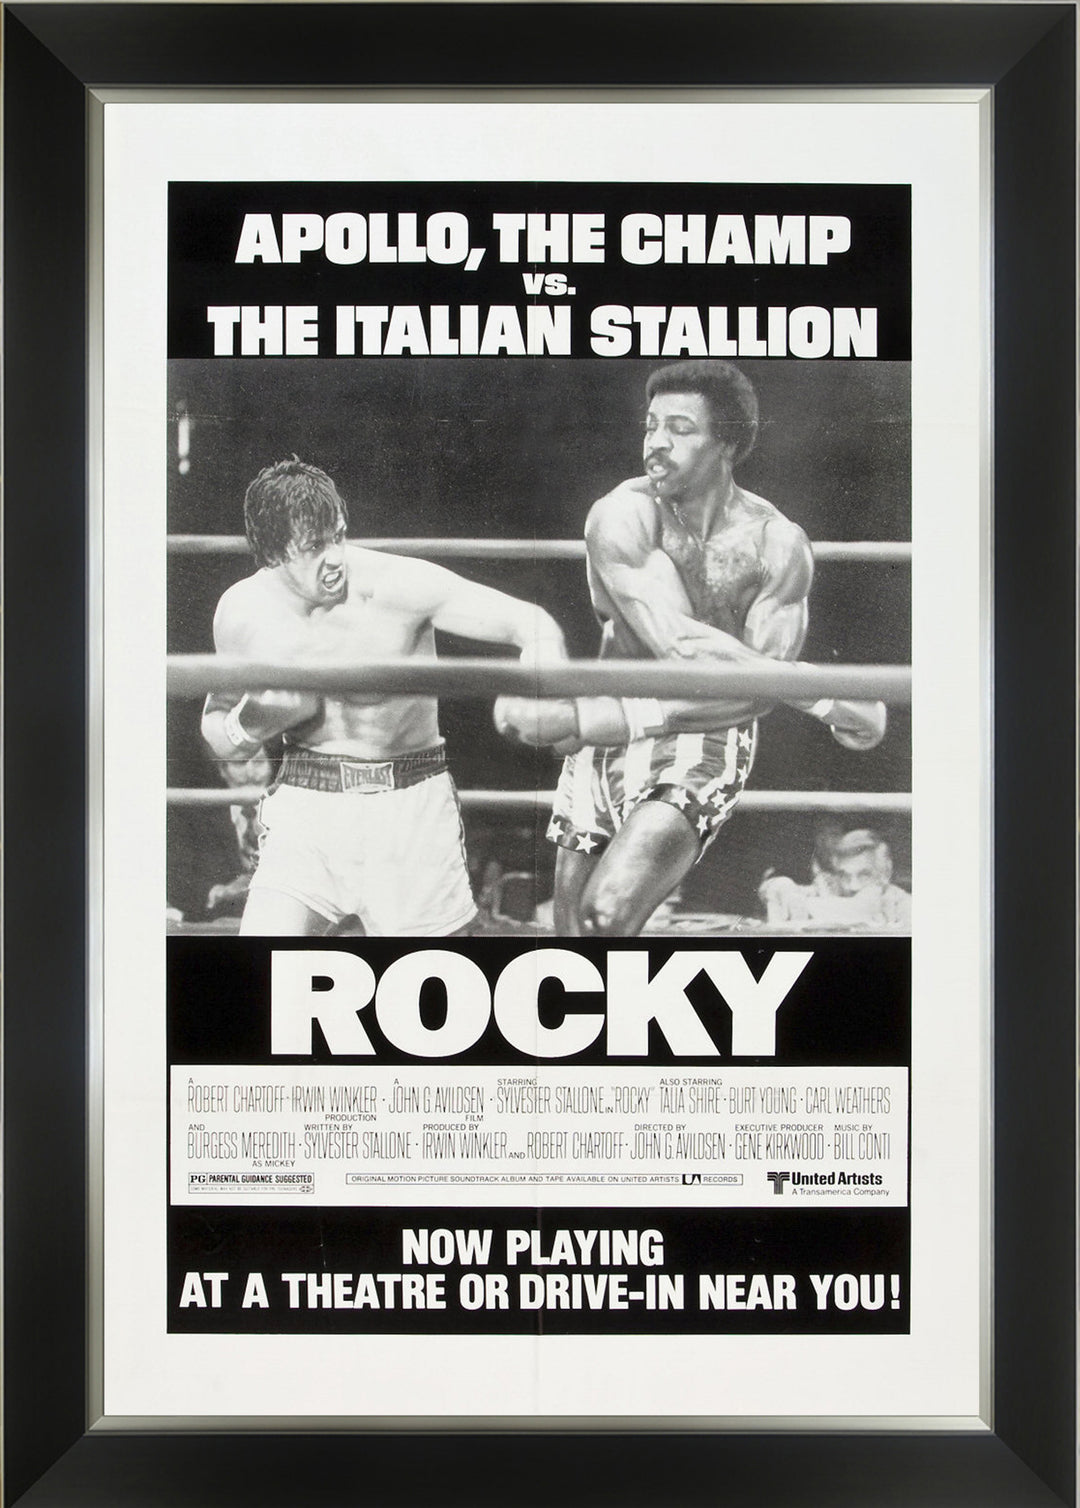 Rocky - Framed Classic Movie Poster Reprint, Contemporary Art, Pop Culture Art, Movies, Collectibile Memorabilia, AAAPM32523